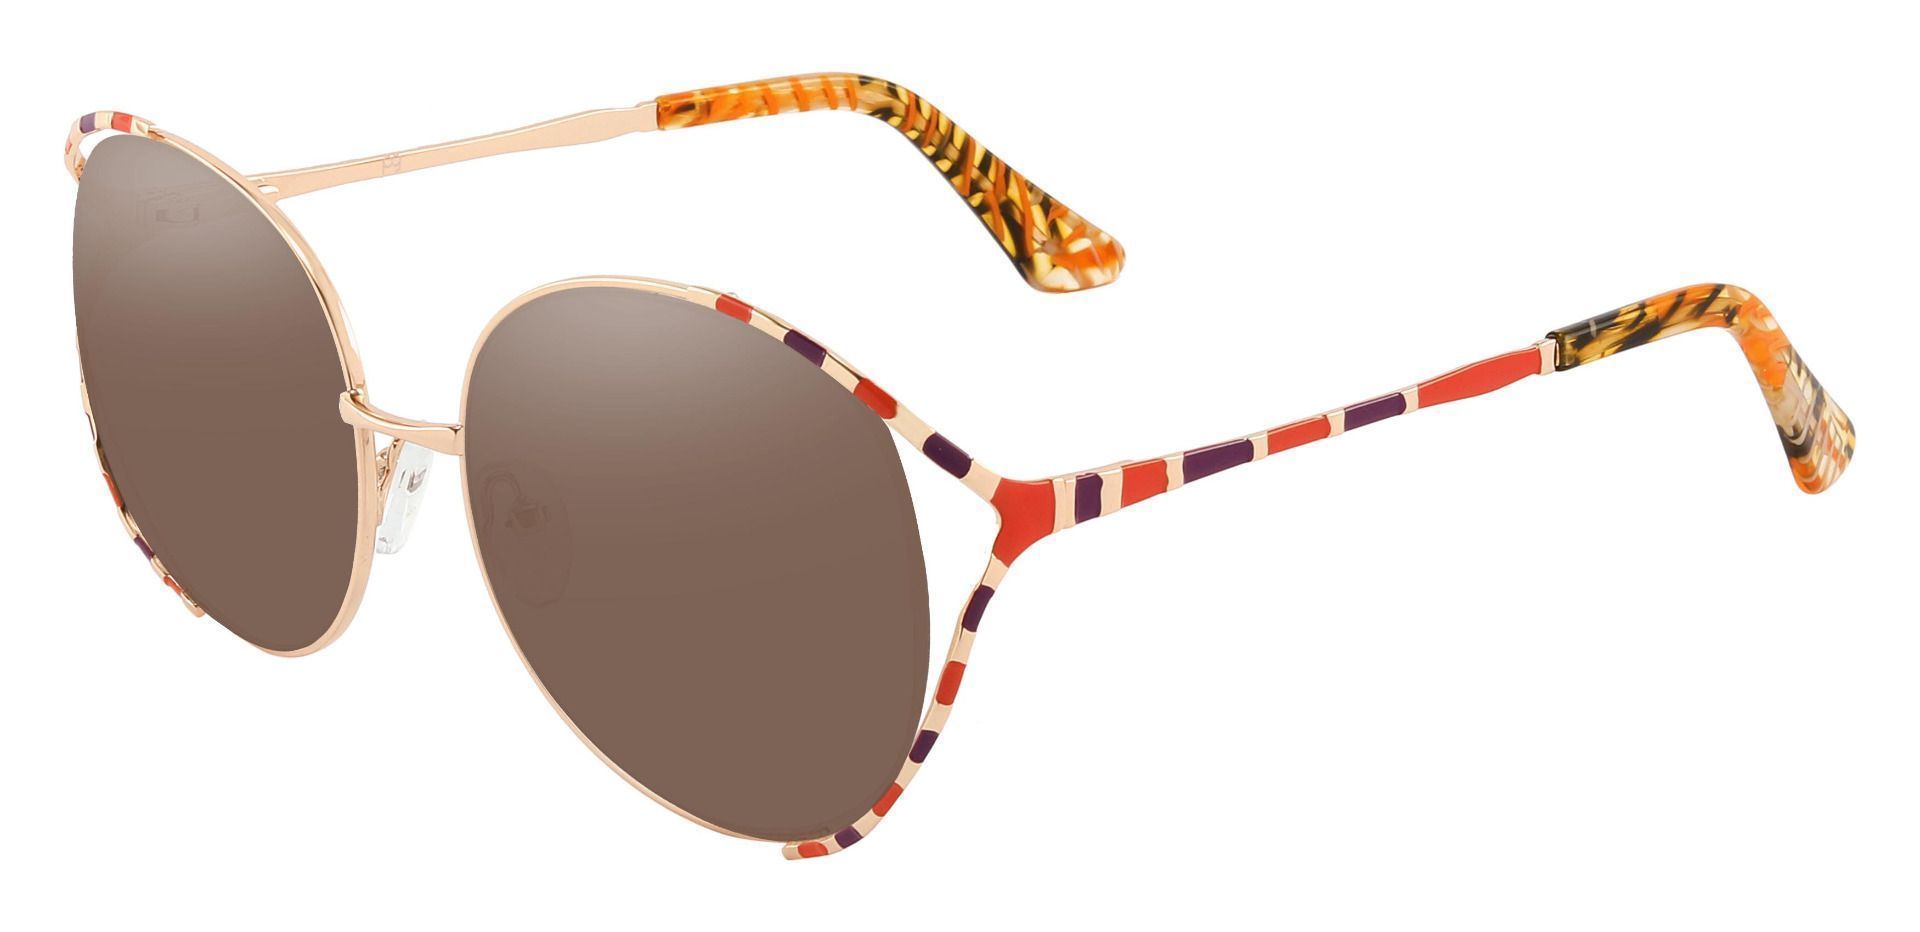 Dorothy Oval Progressive Sunglasses - Brown Frame With Brown Lenses